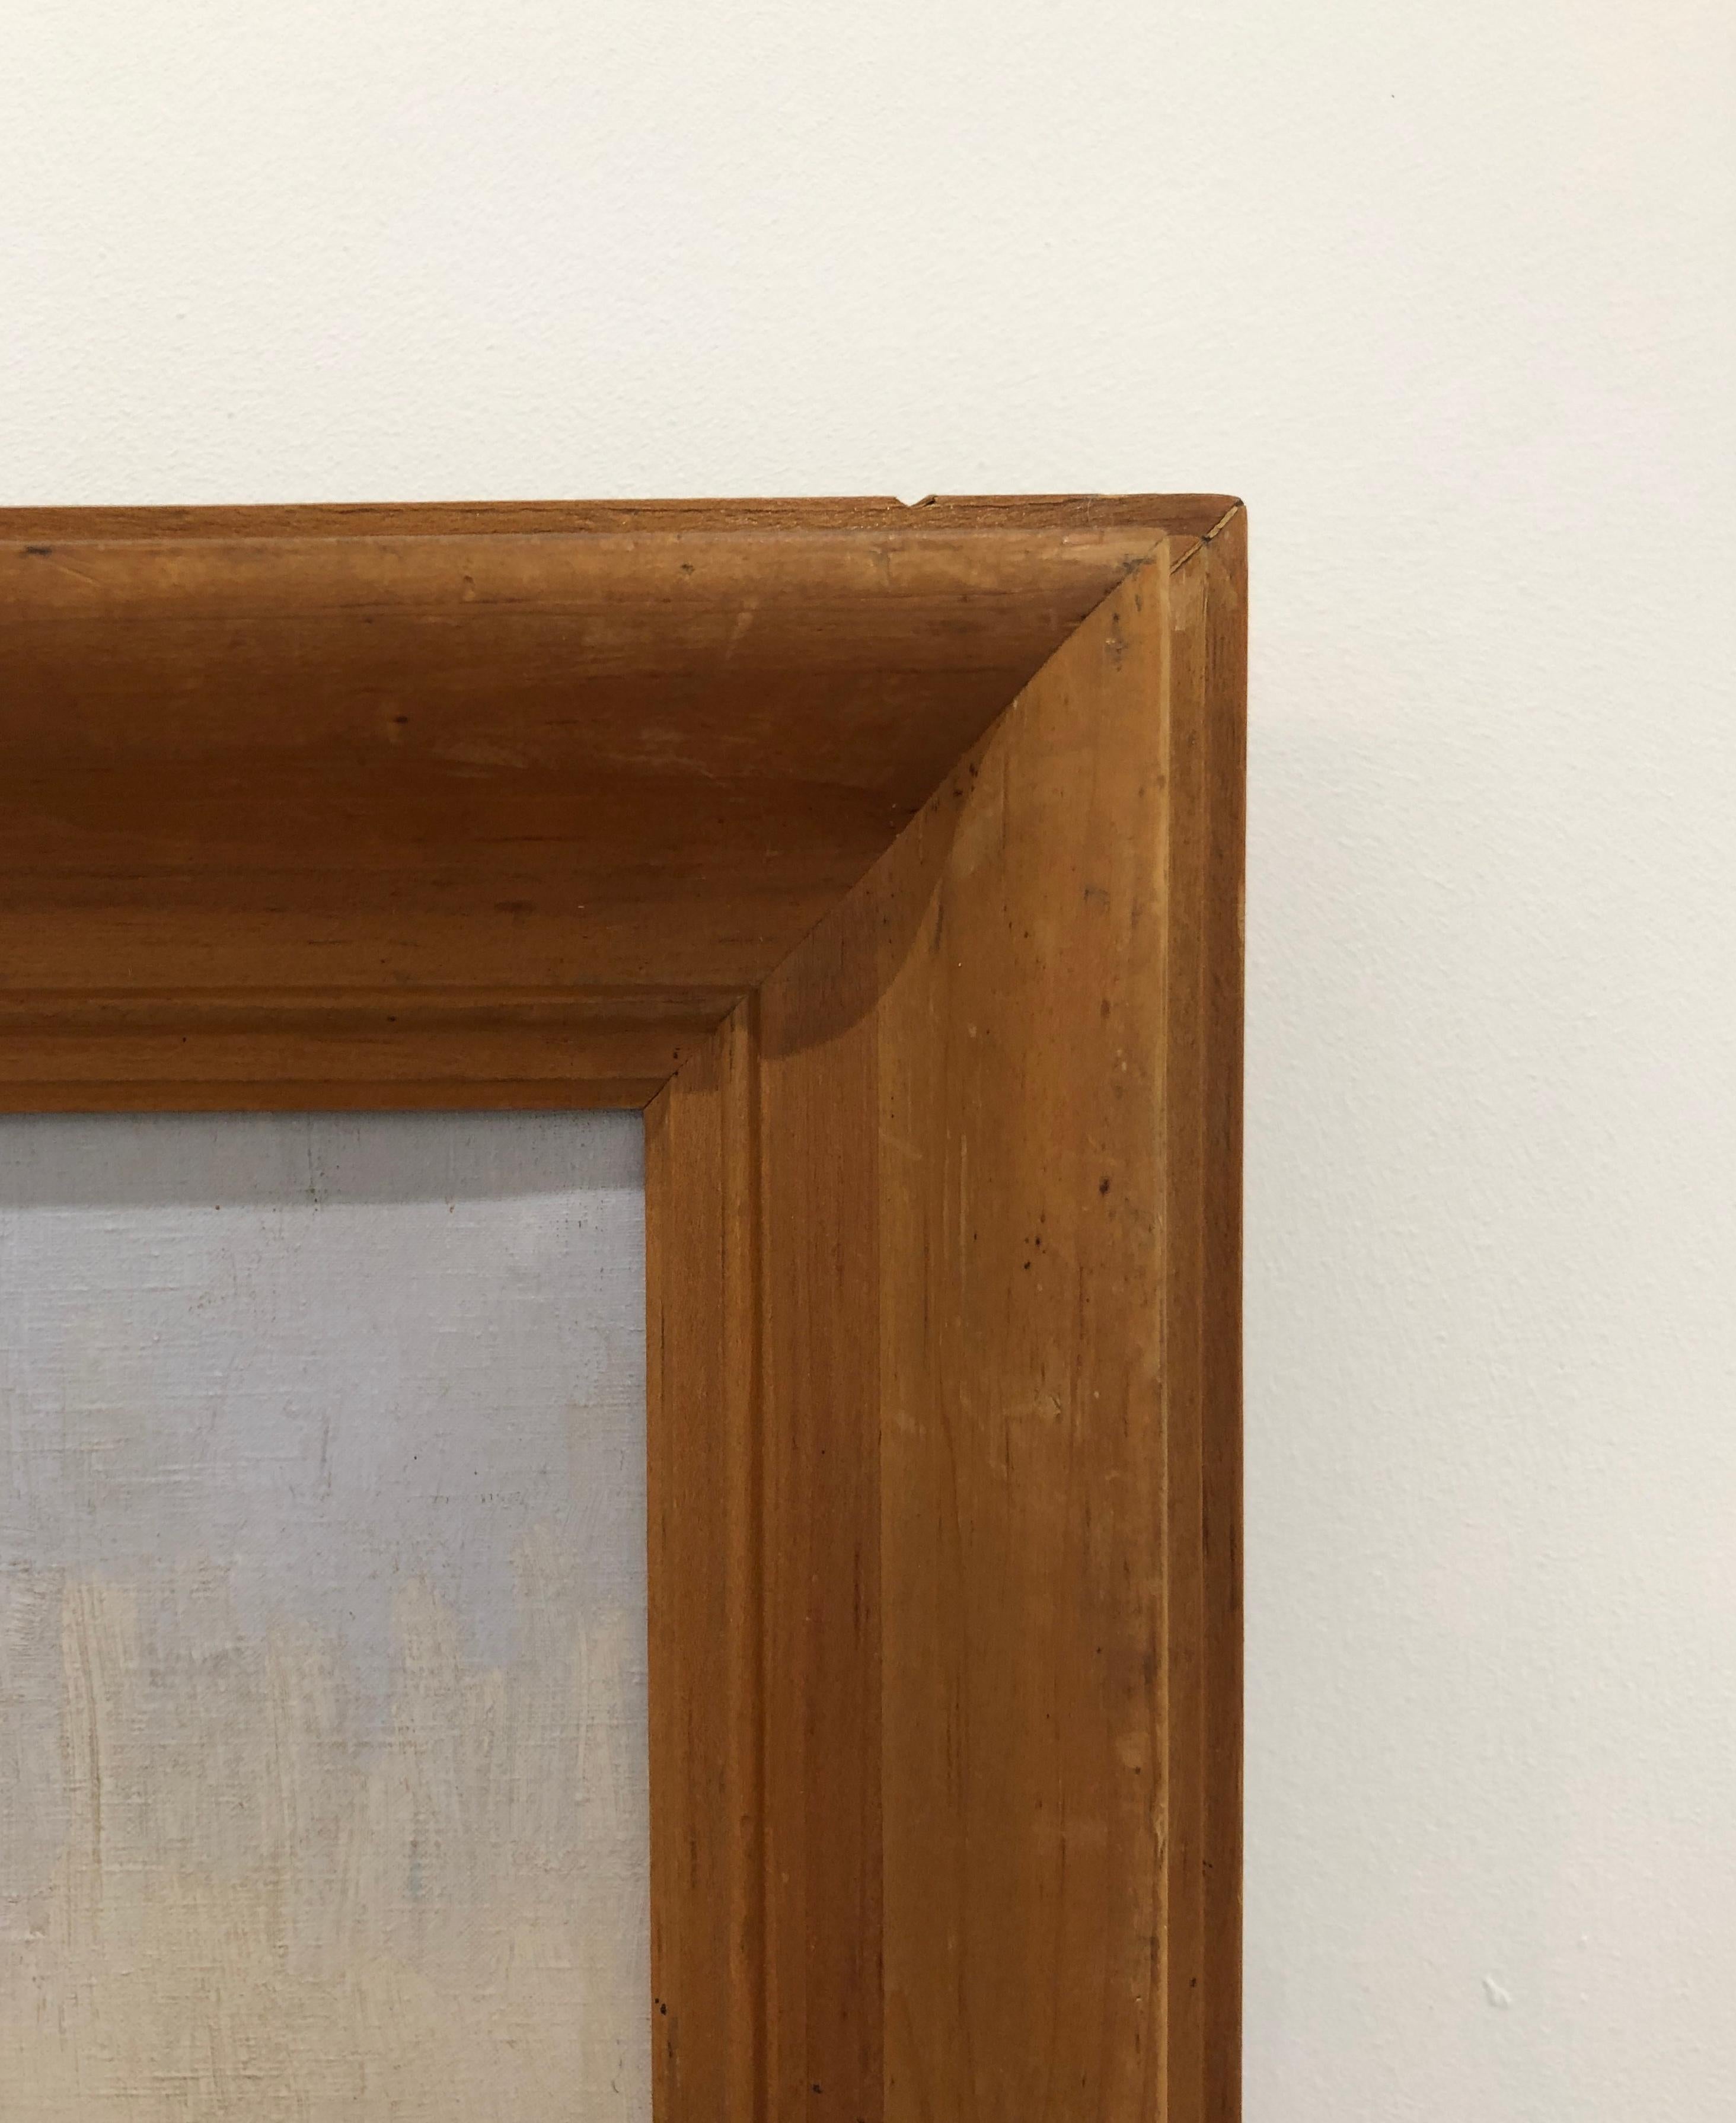 Work on canvas
Brown wooden frame
76.5 x 65.5 x 4.5 cm